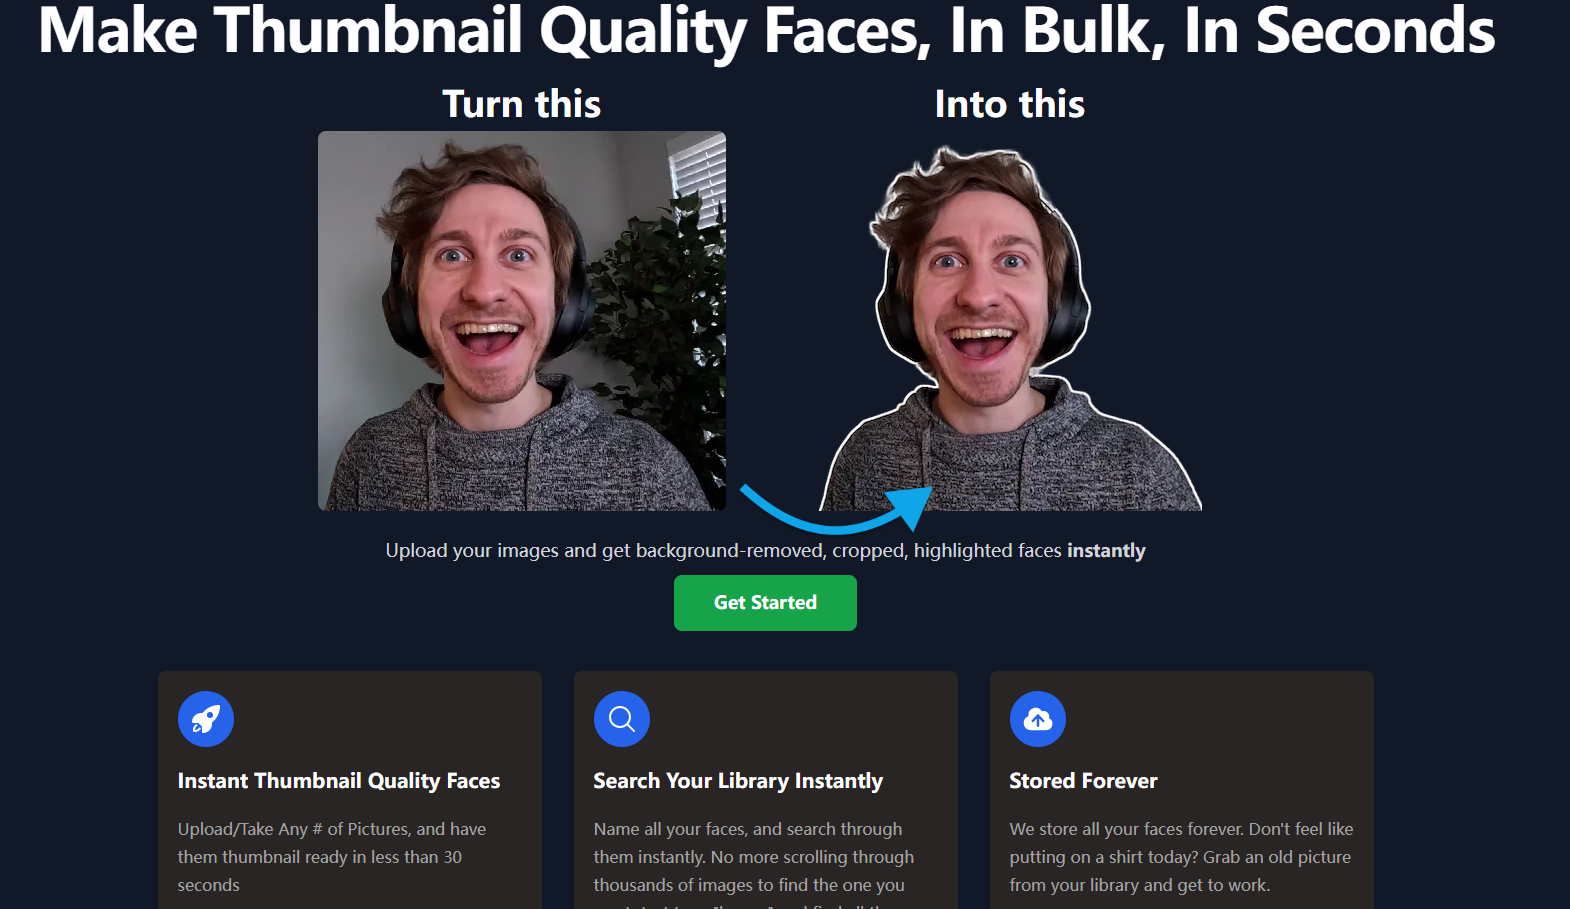 Thumbnail Face